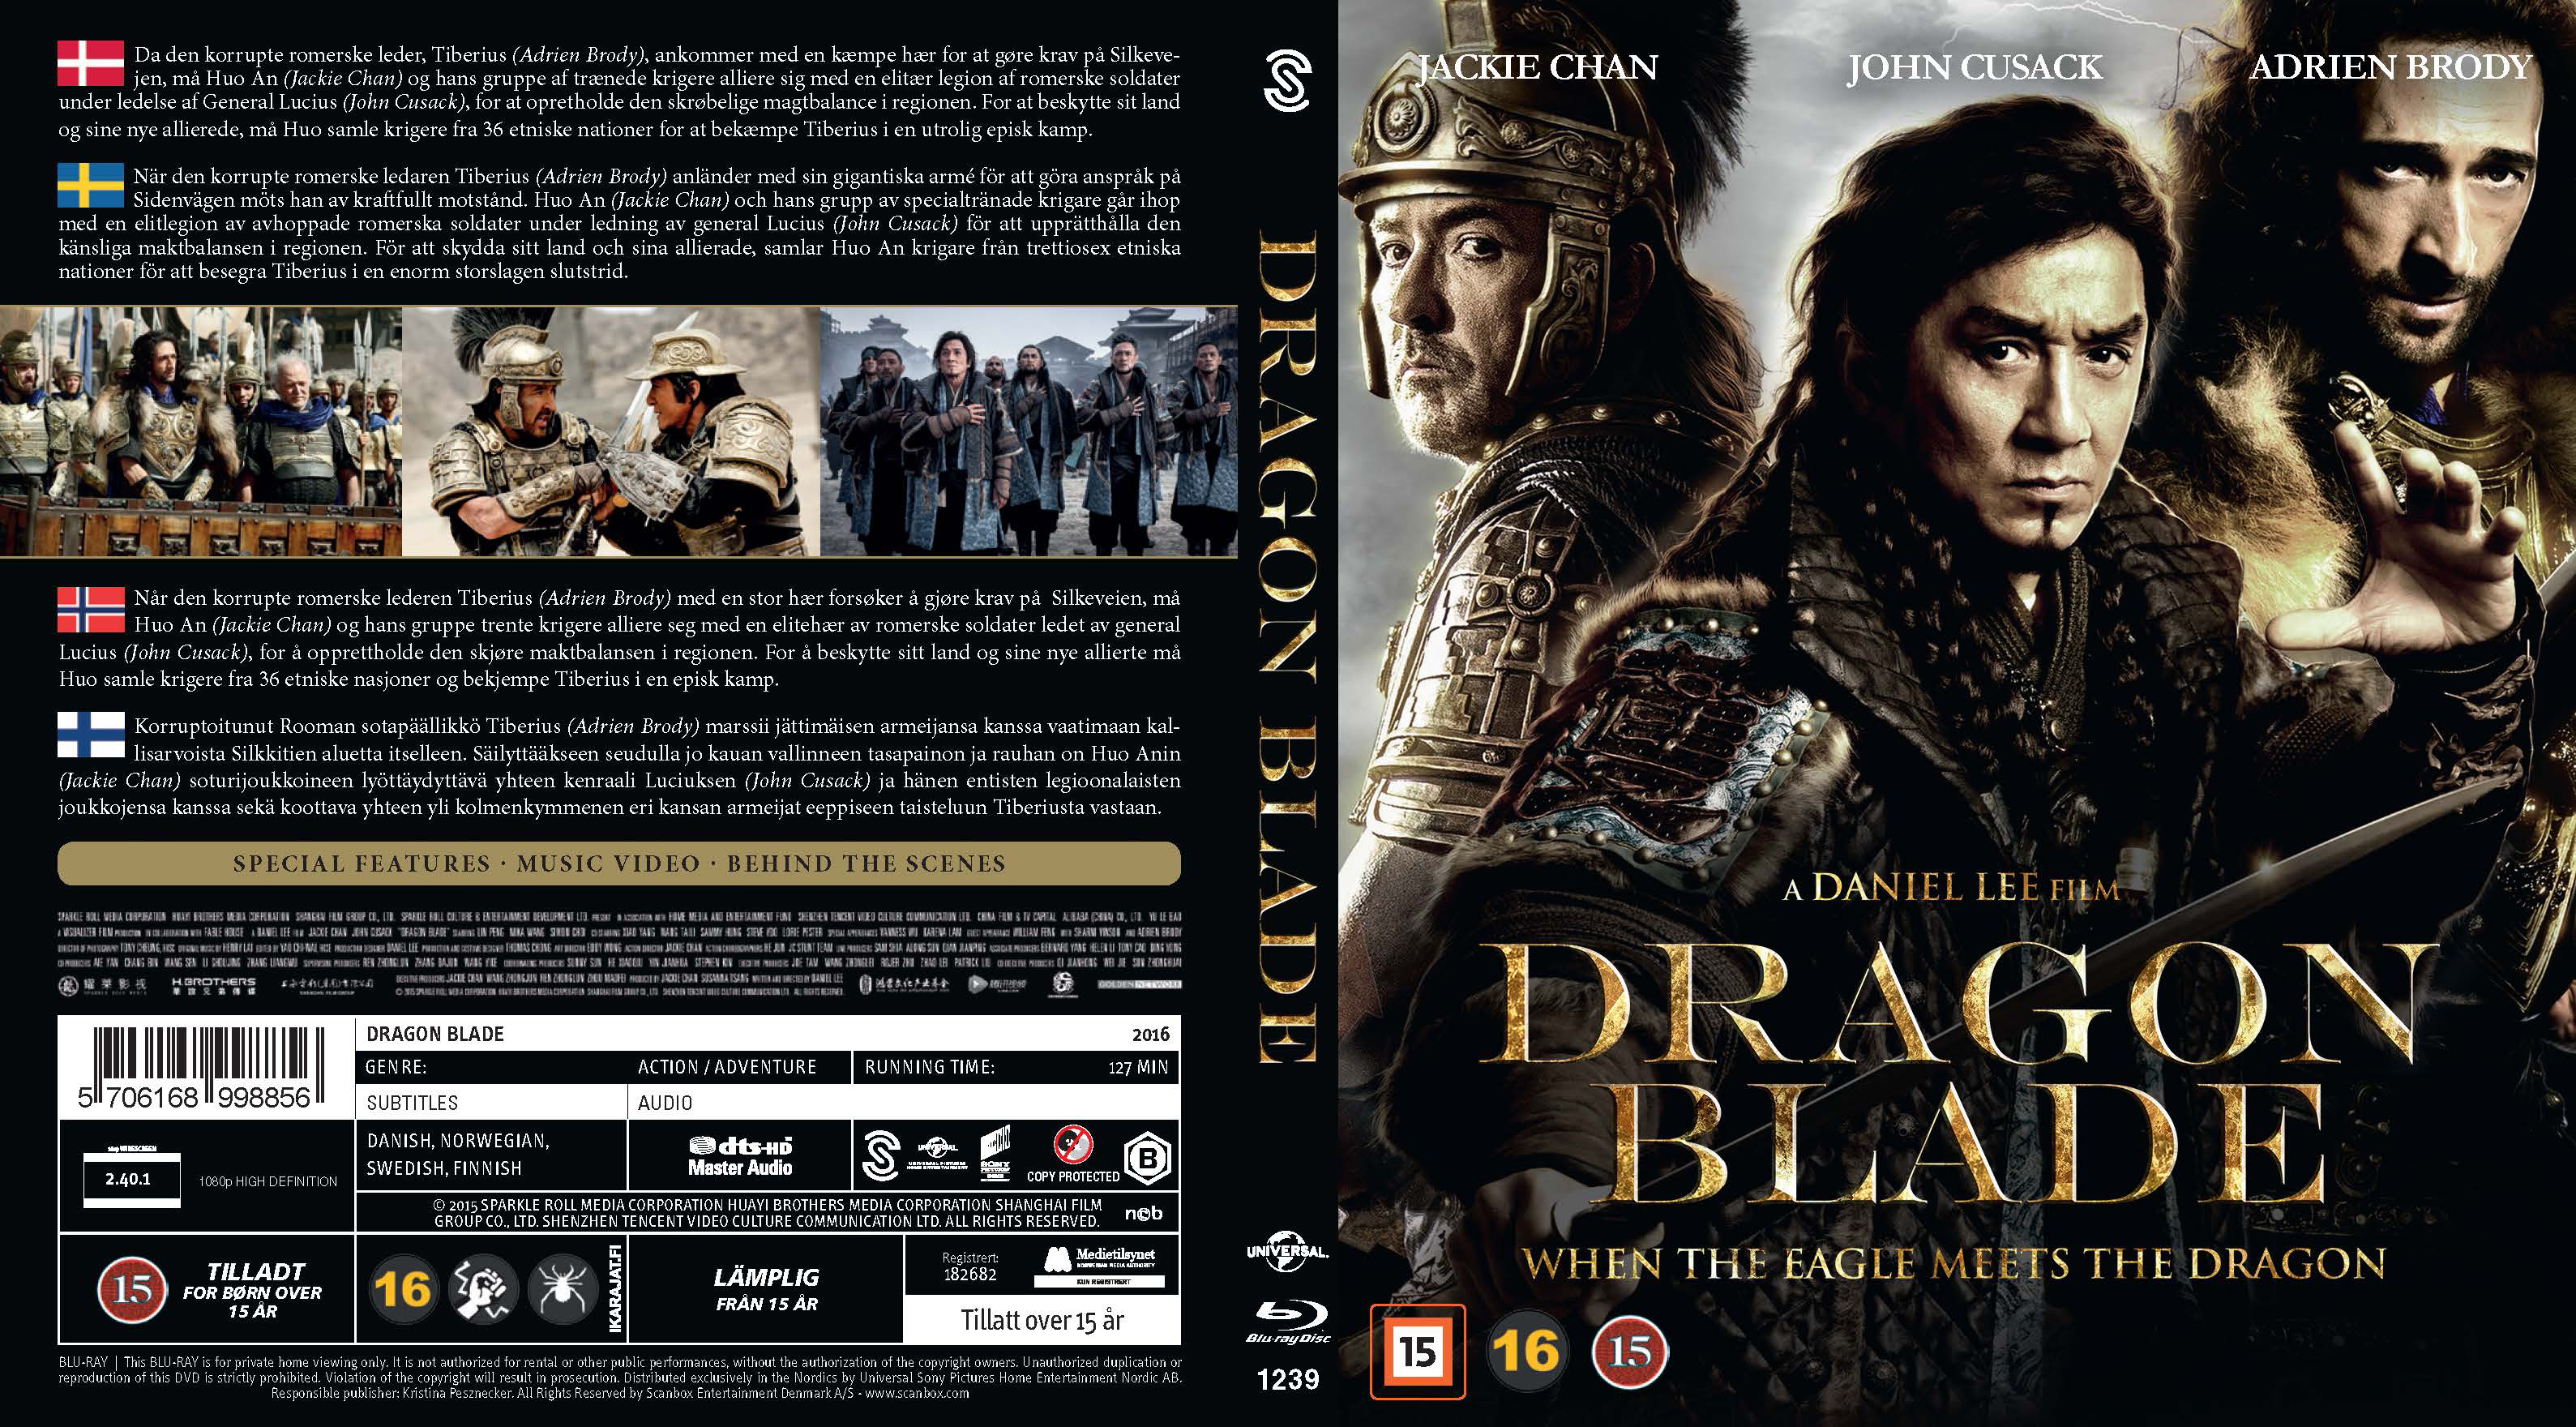 Dragon Blade (Blu-ray) 